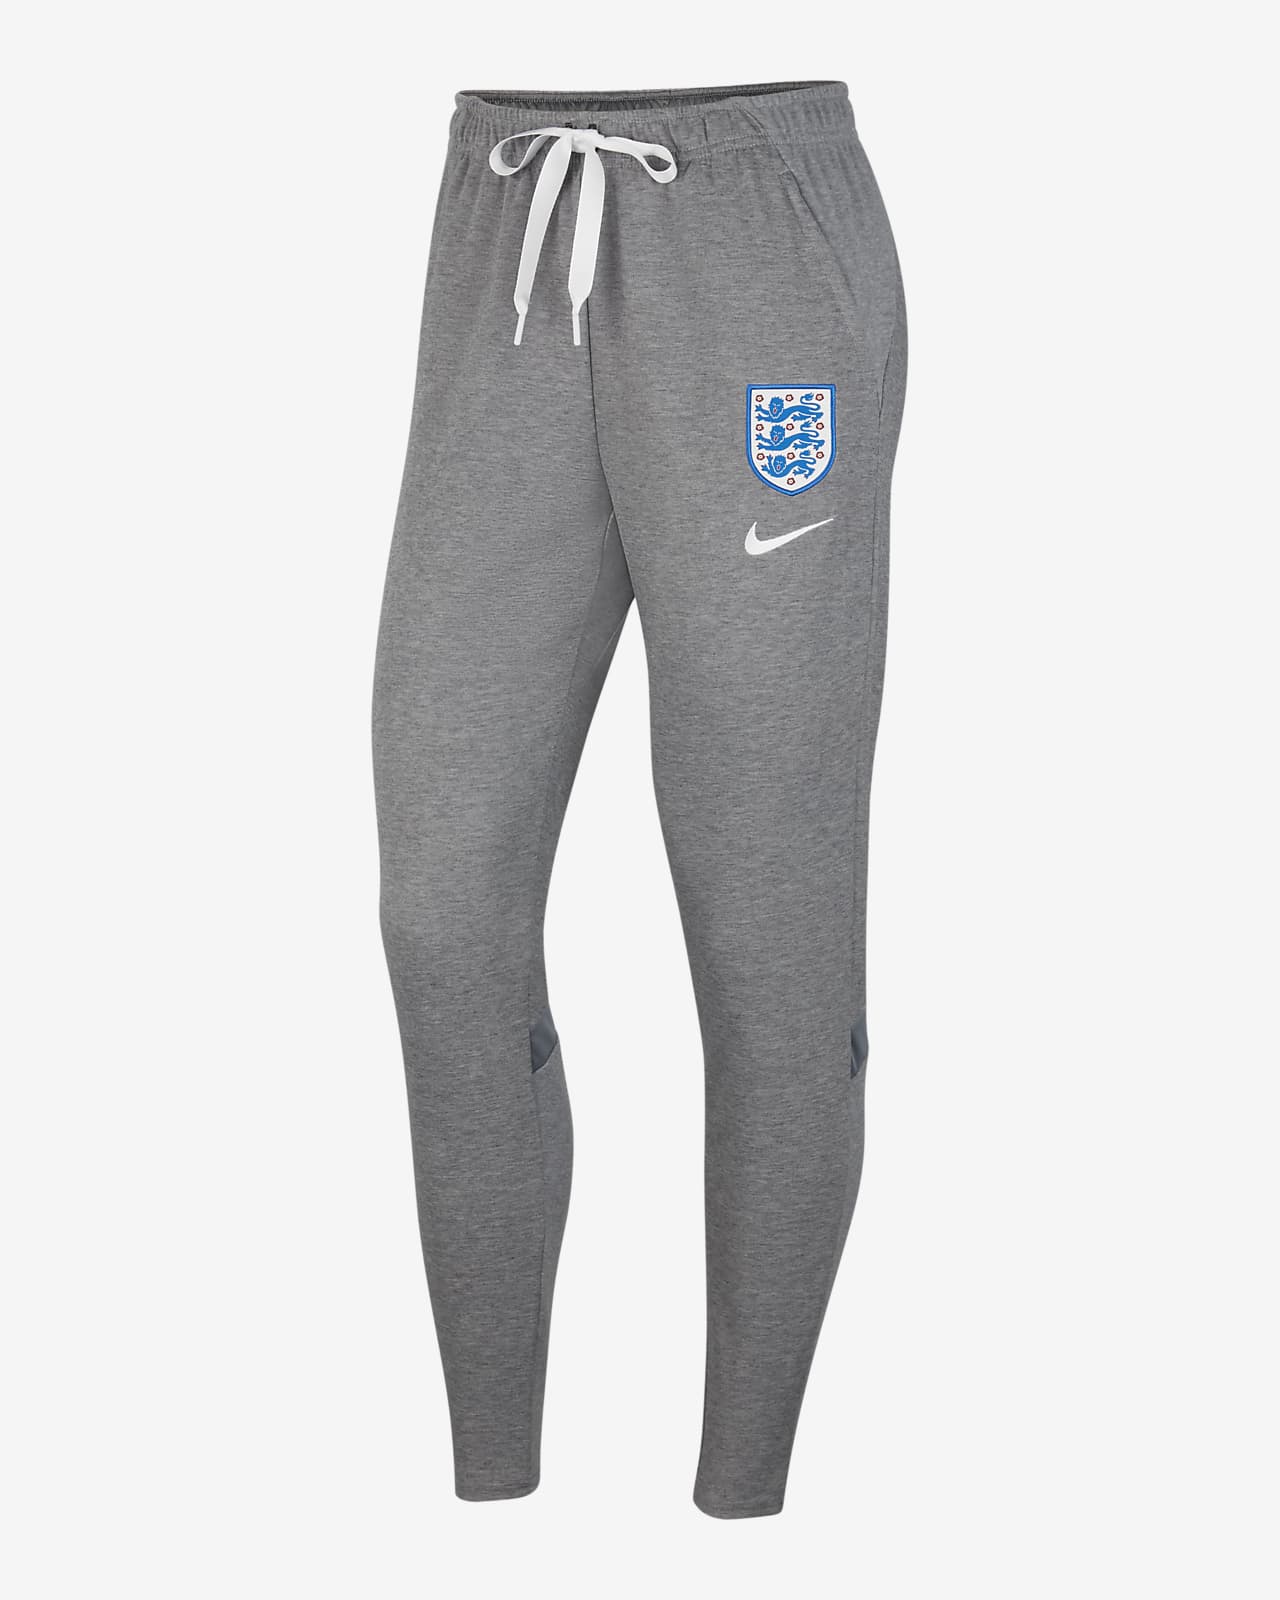 Pantalon de football Nike Angleterre pour Femme